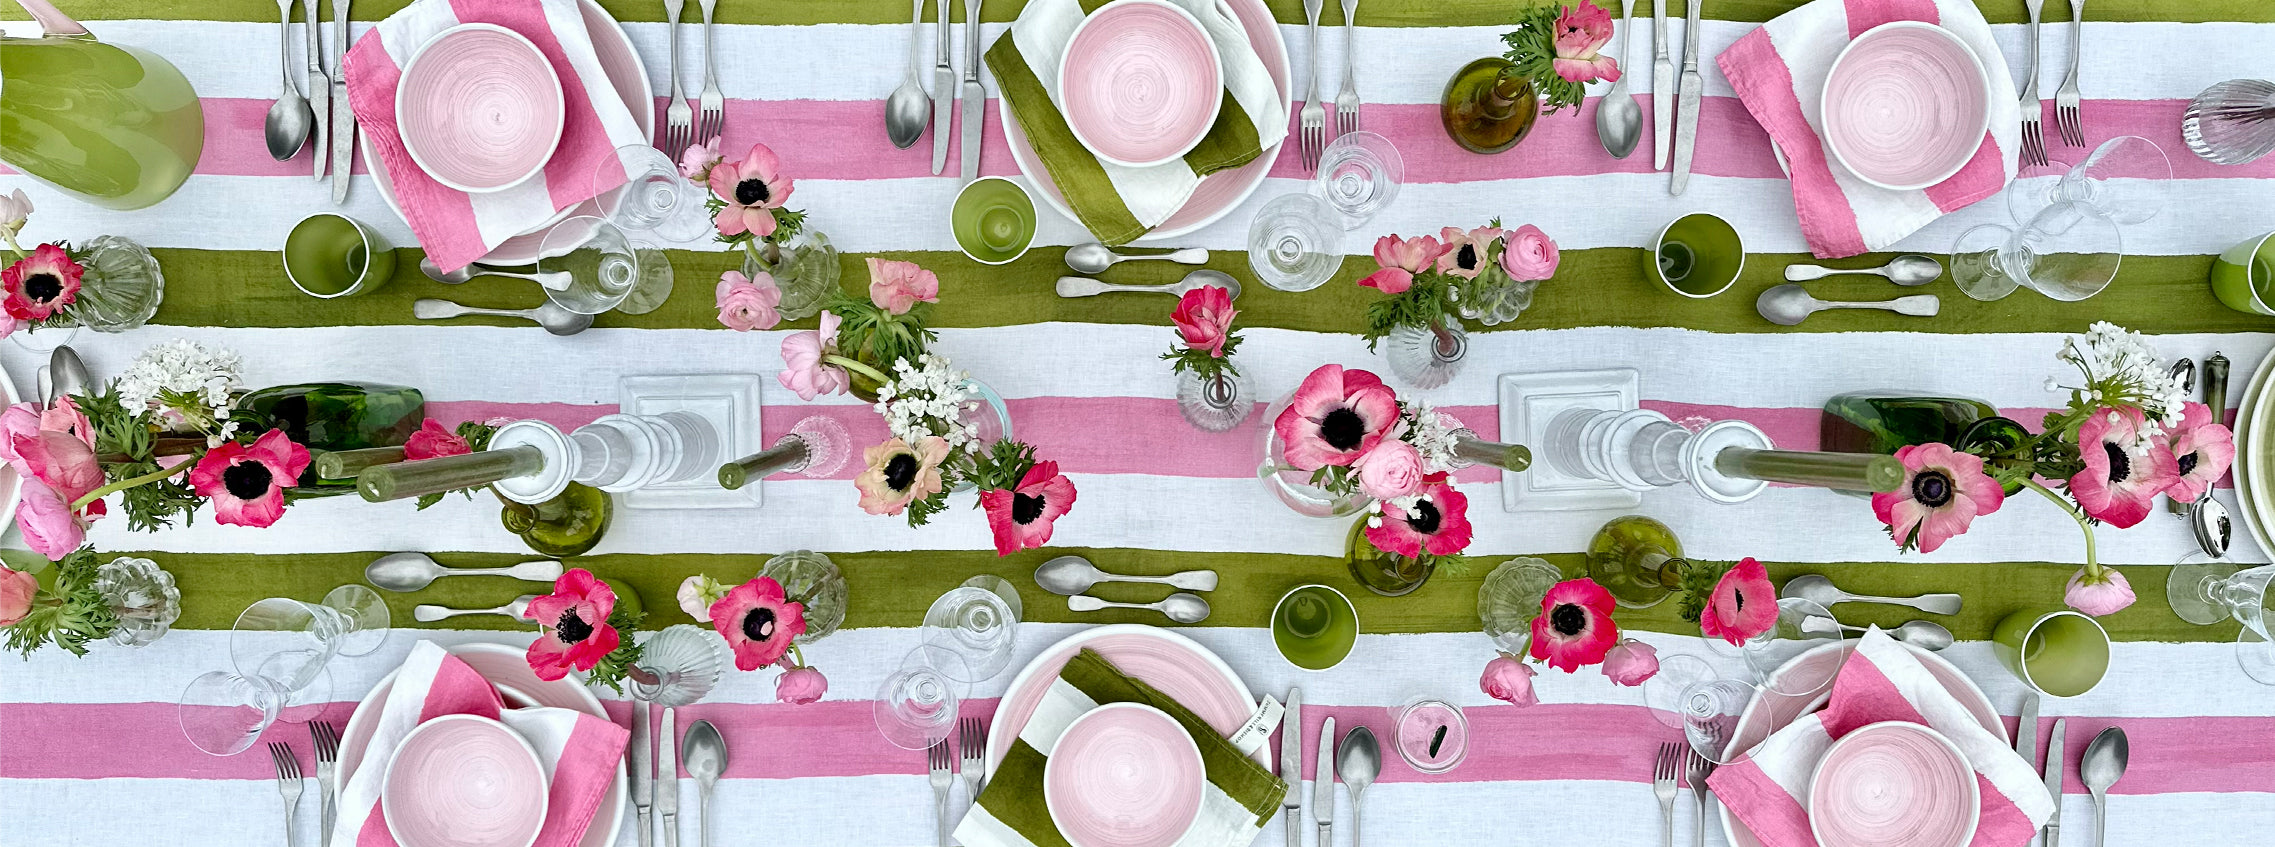 'Stripe' Tablescape in Rose Pink & Avocado Green